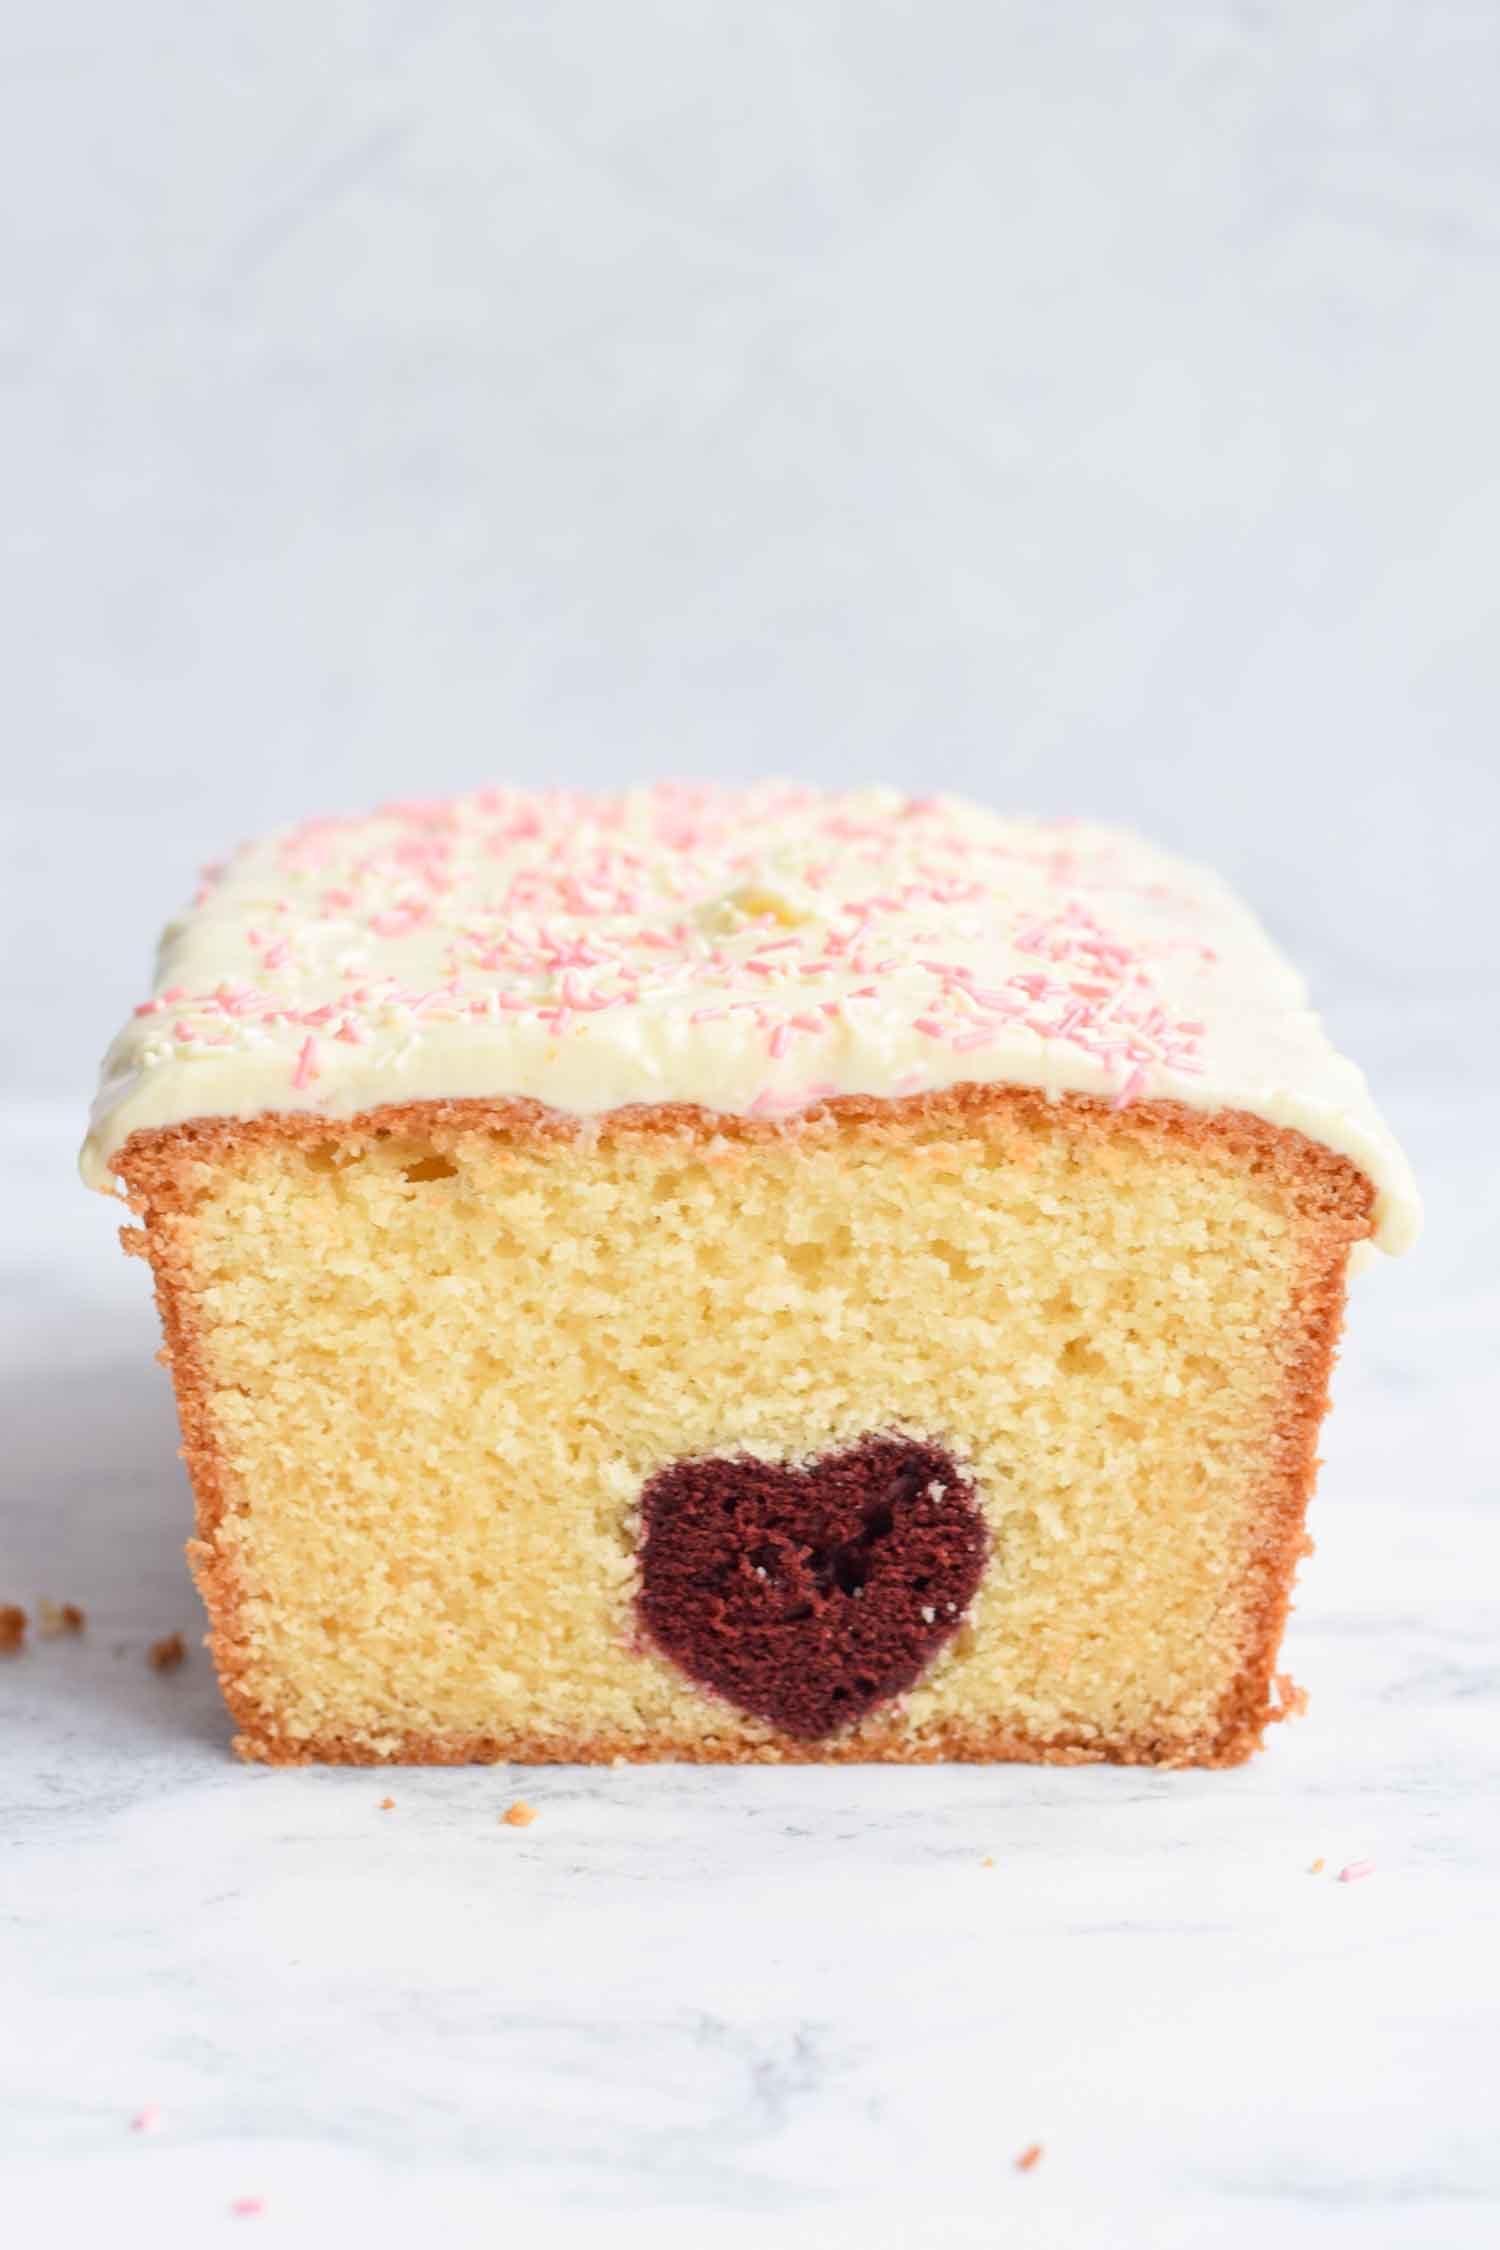 A gluten-free vanilla cake with a heart inside